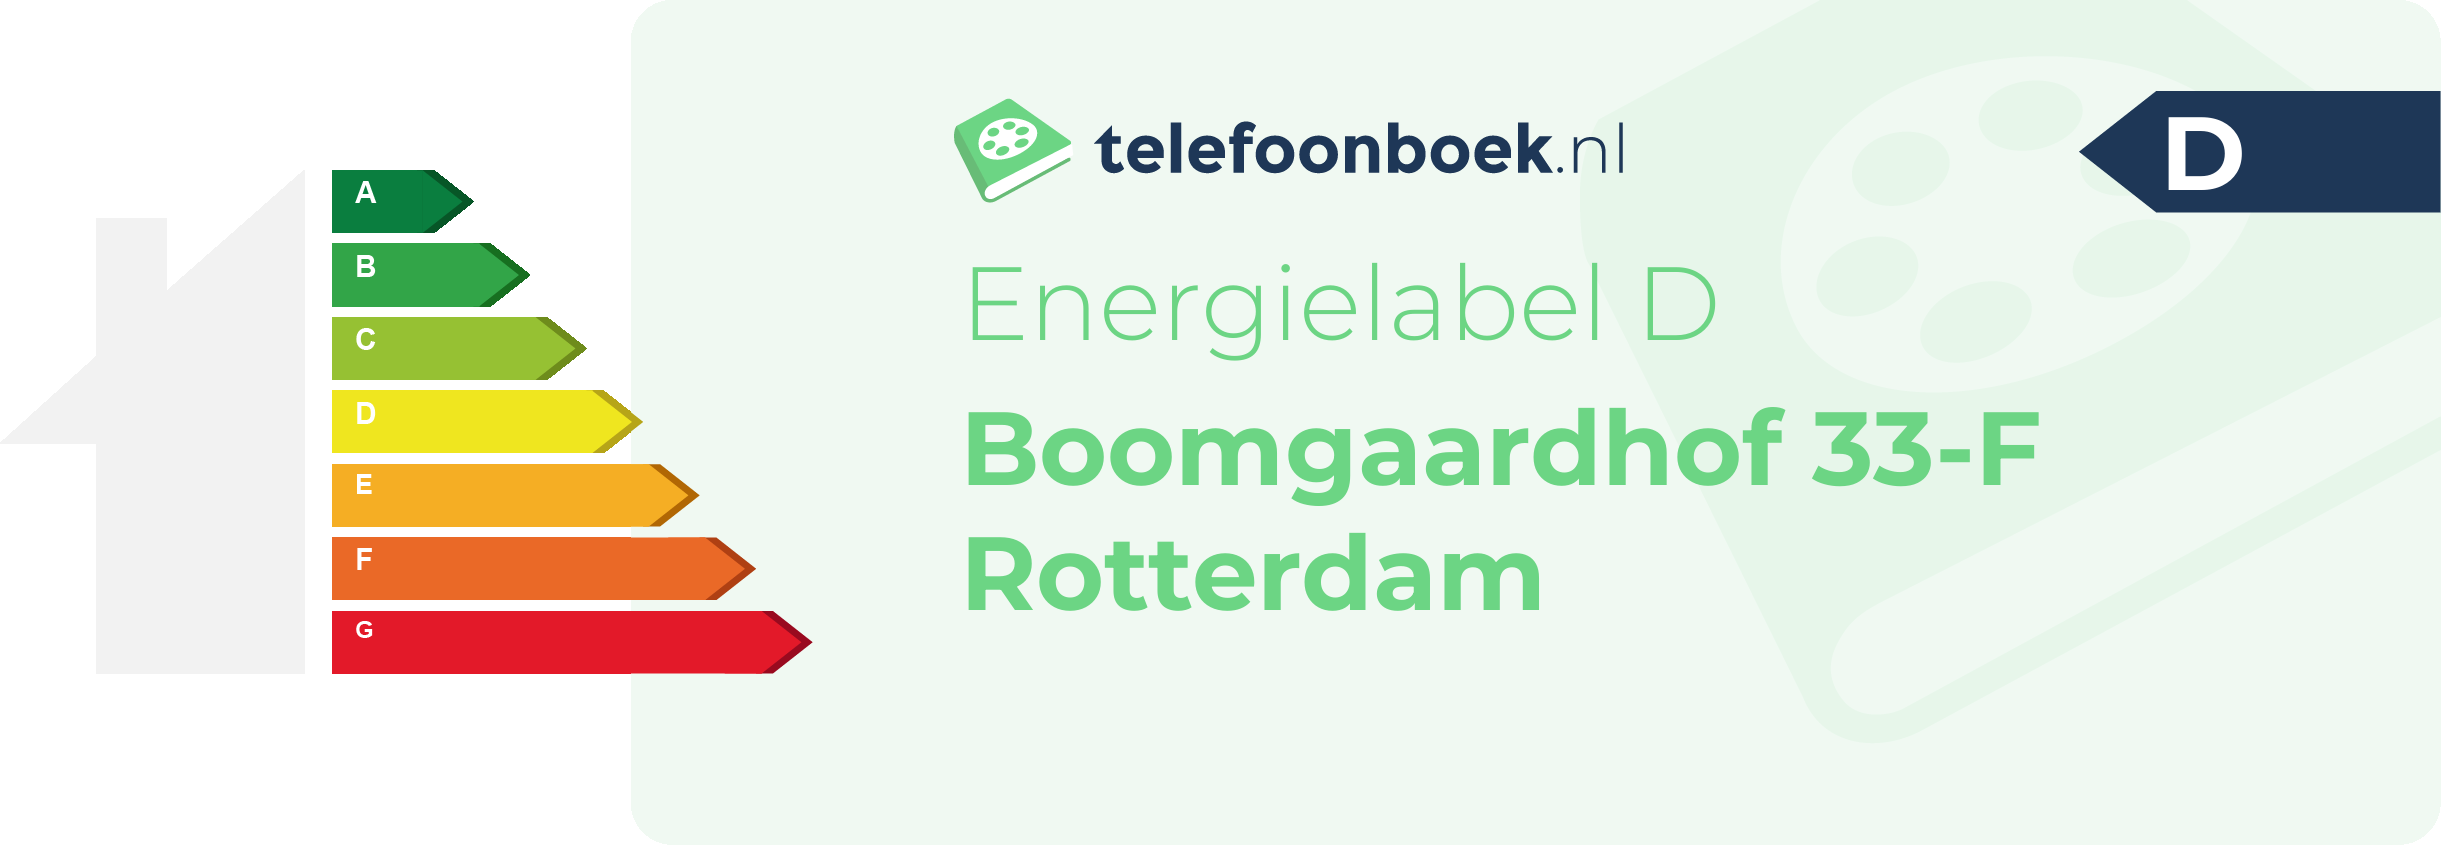 Energielabel Boomgaardhof 33-F Rotterdam